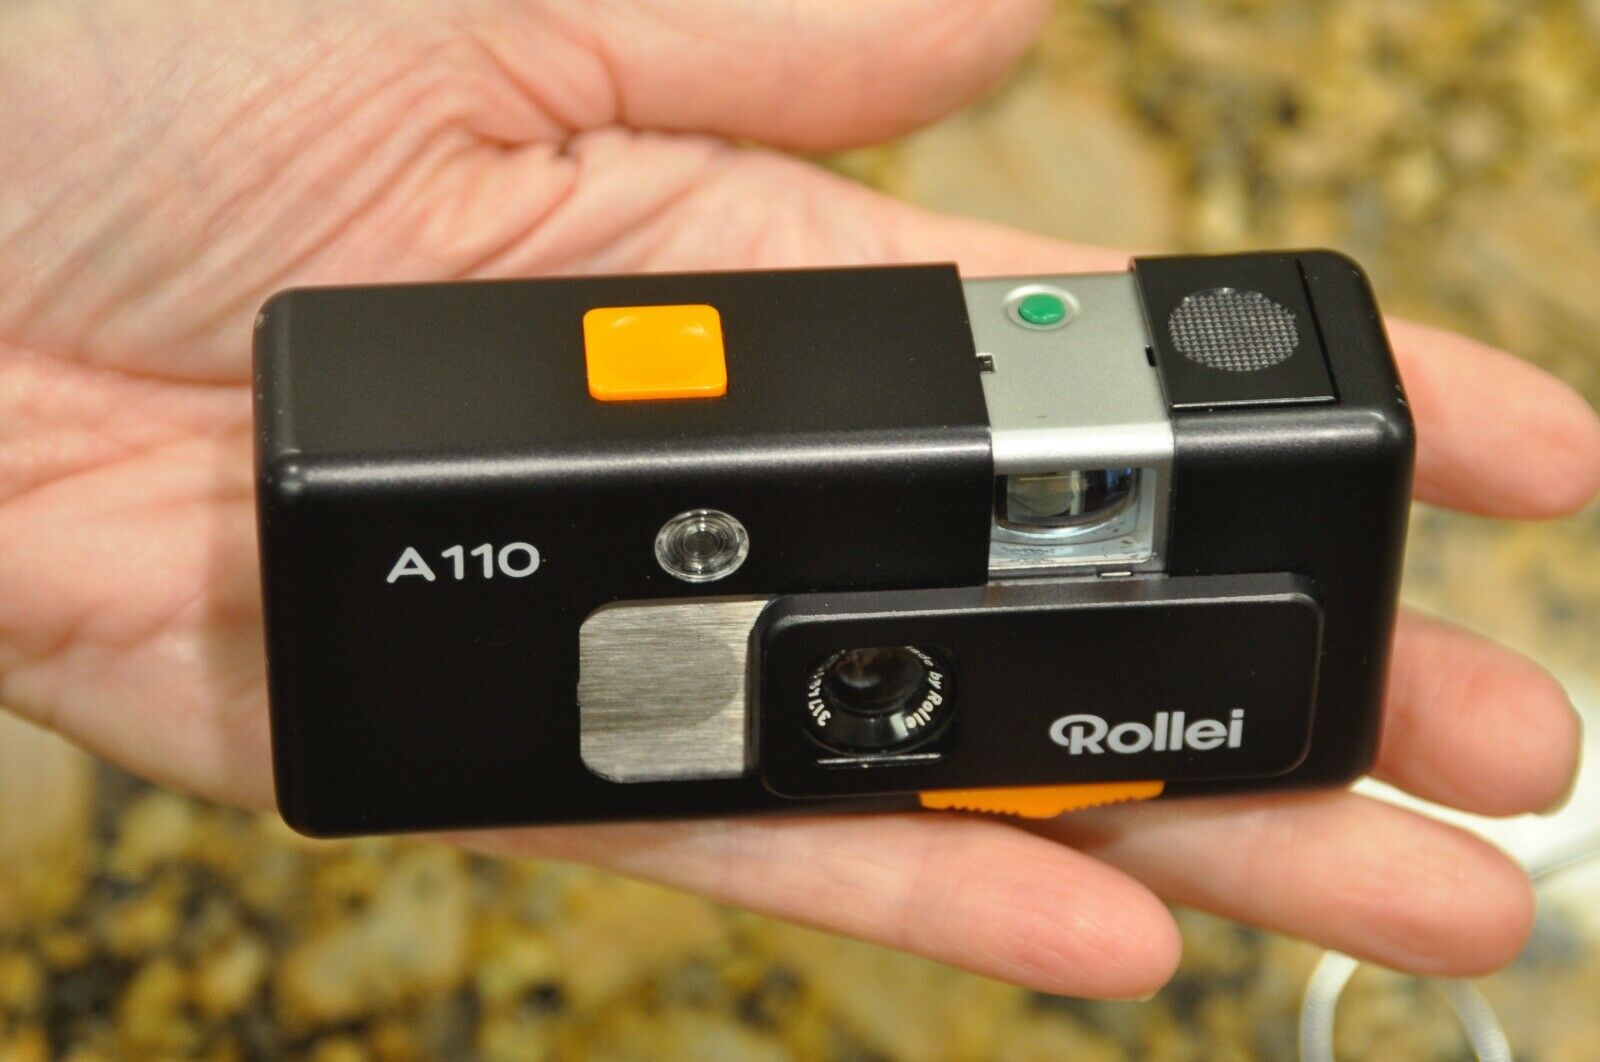 Lot 3 Vintage Subminiature Spy Cameras Rollei A110, Minolta 16 Mg, Nikon Nuvis